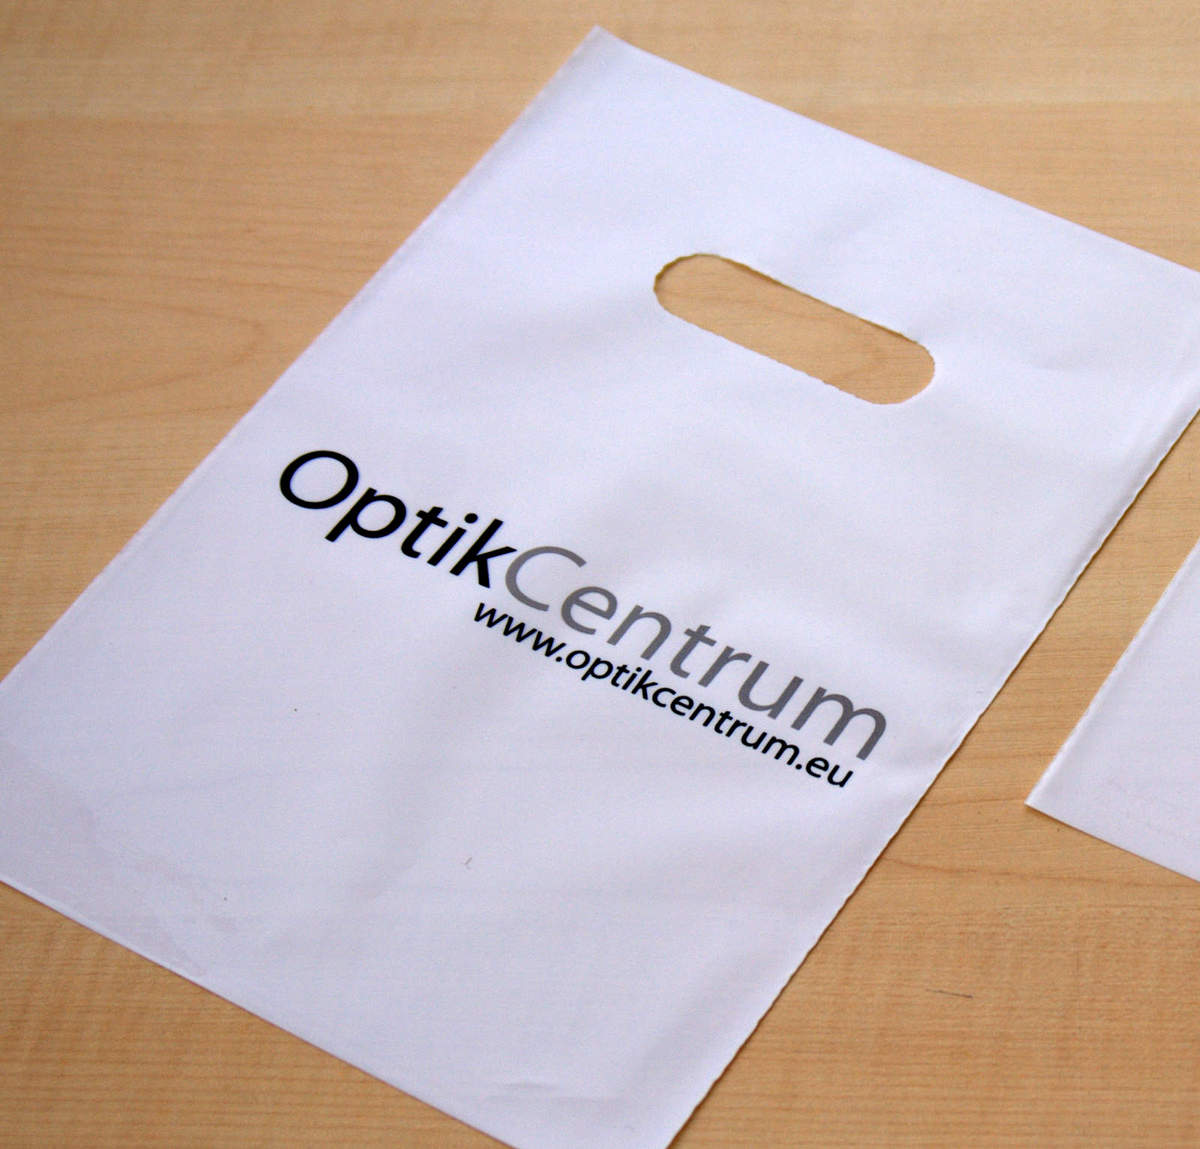 Biele igelitové tašky pre OptikCentrum